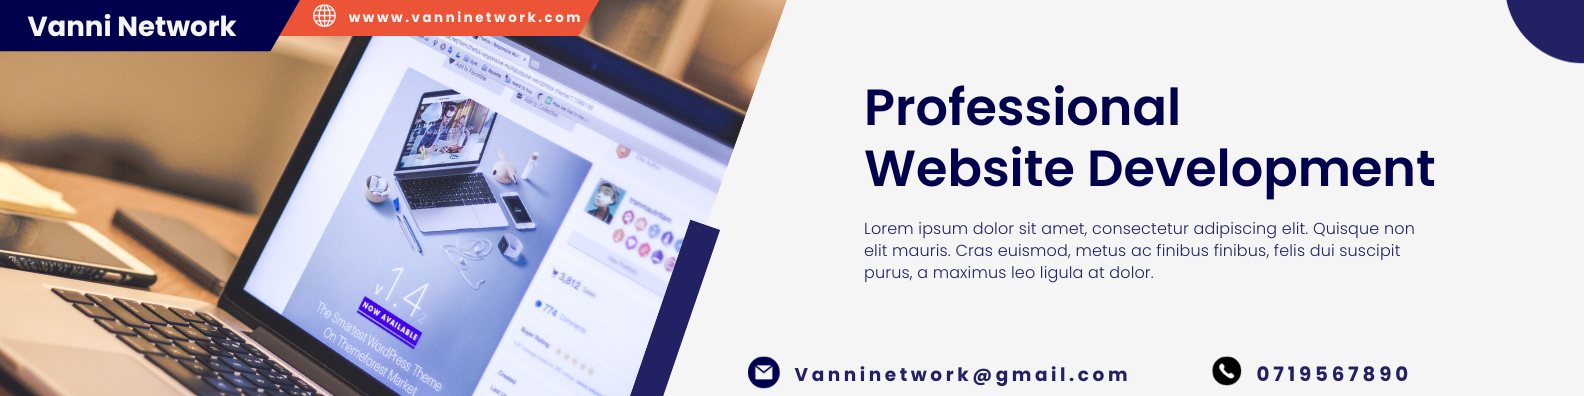 Vanni Network